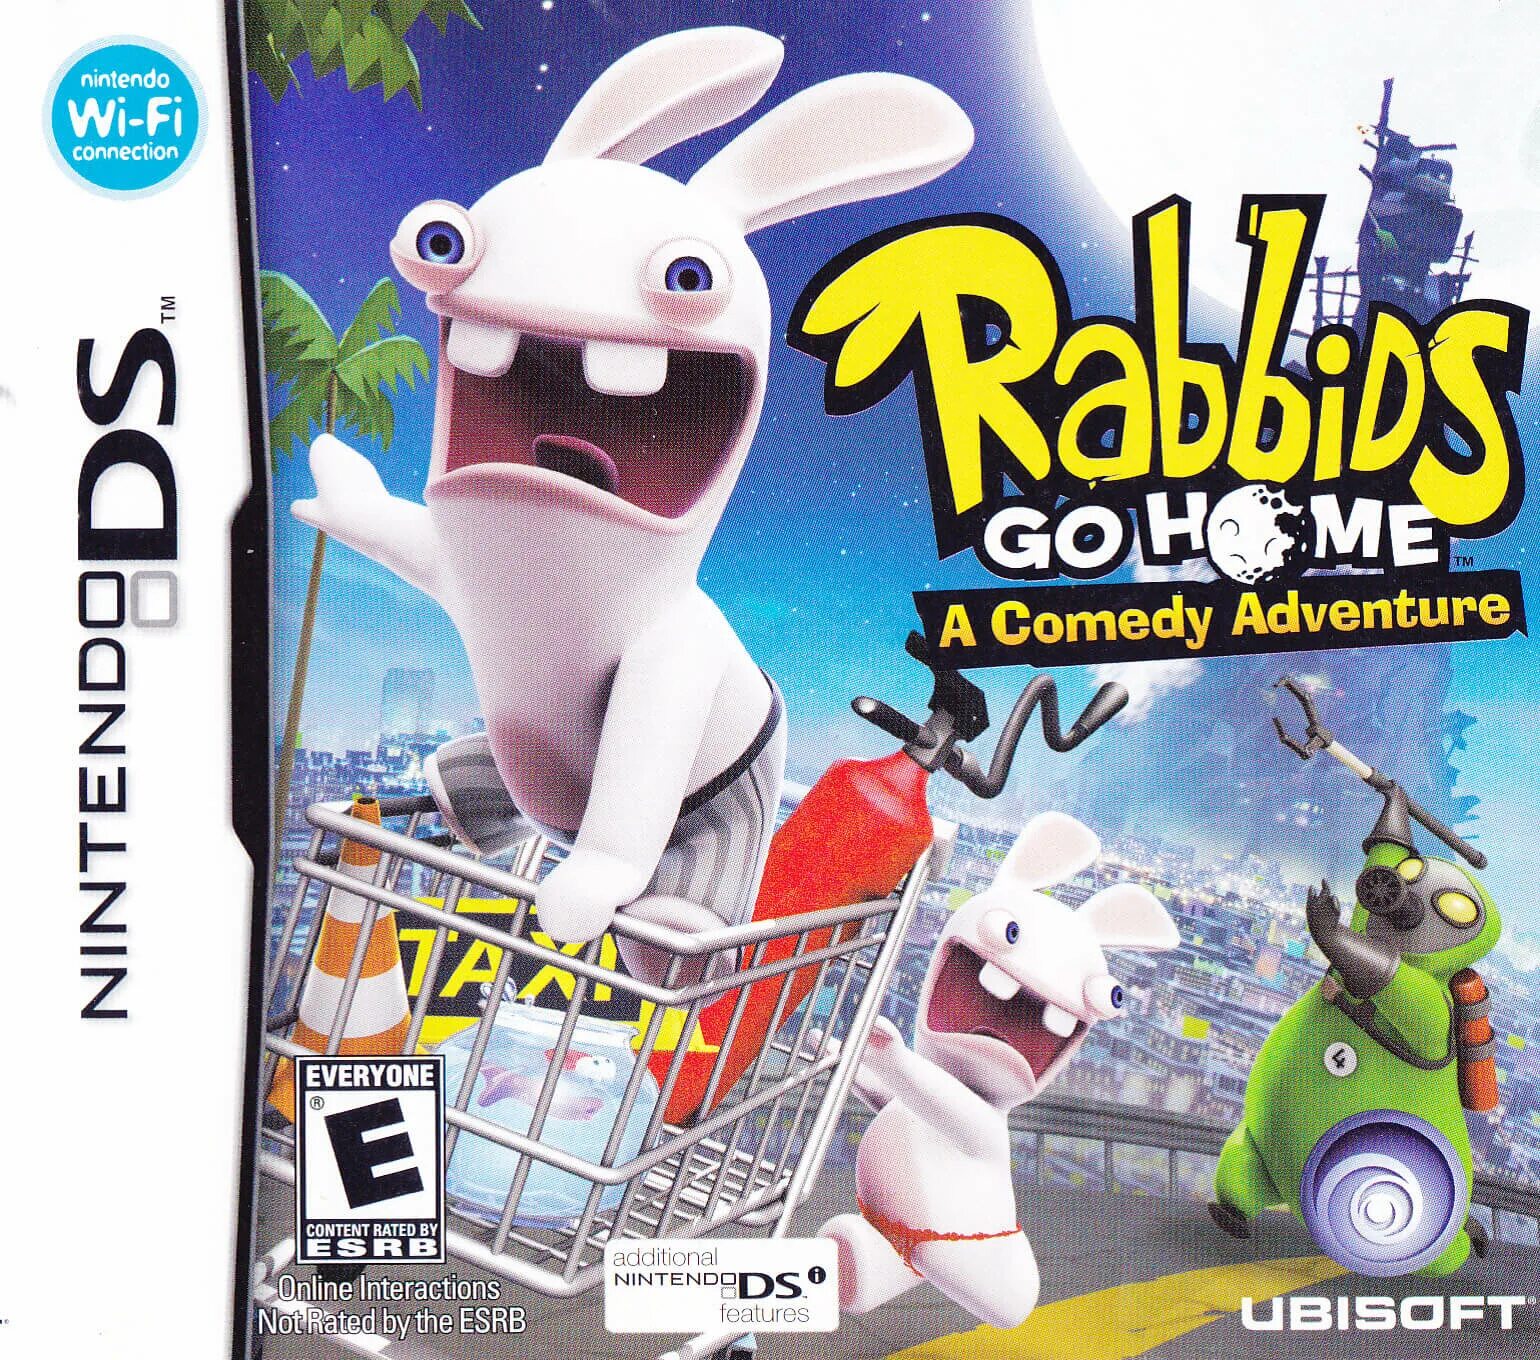 Rabbids Invasion (Xbox 360). Raving Rabbids go Home. Raving Rabbids DS. Rabbids Land диск. Rabbids go home